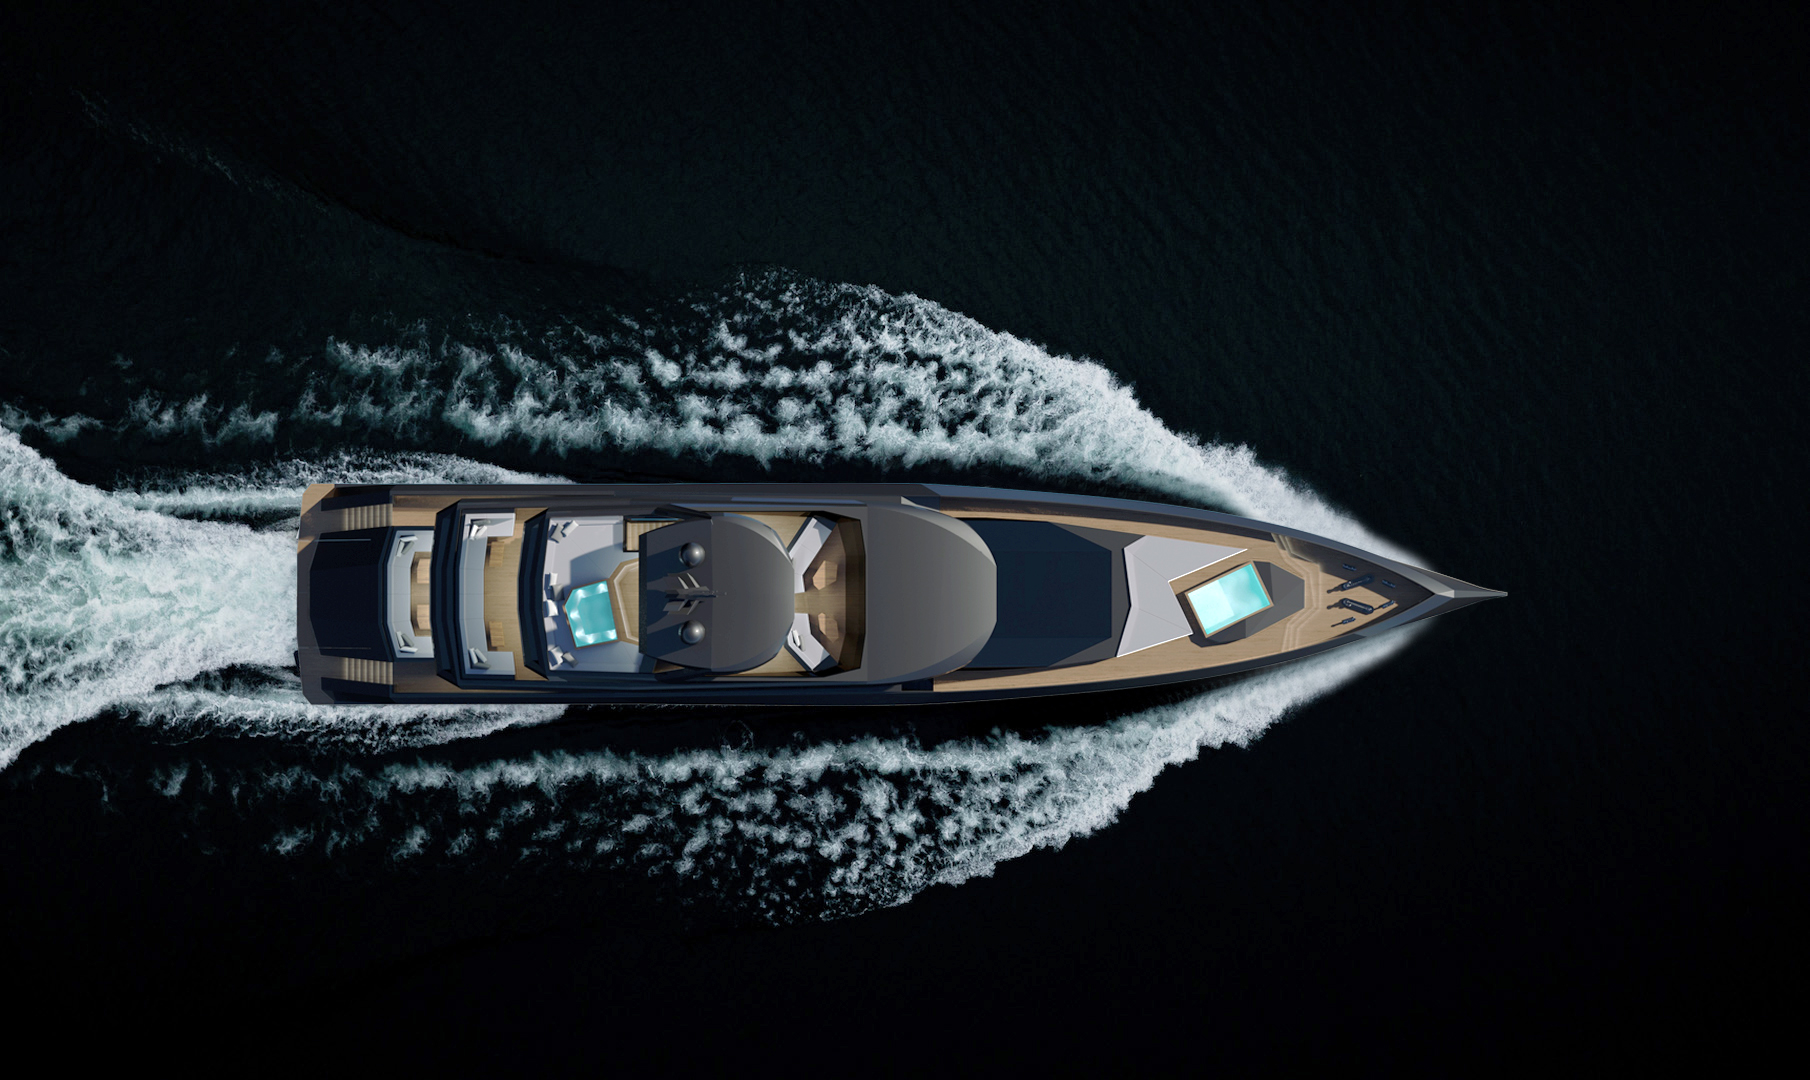 Think disruptive: a 50m superyacht project Odisye from inside | Yacht ...